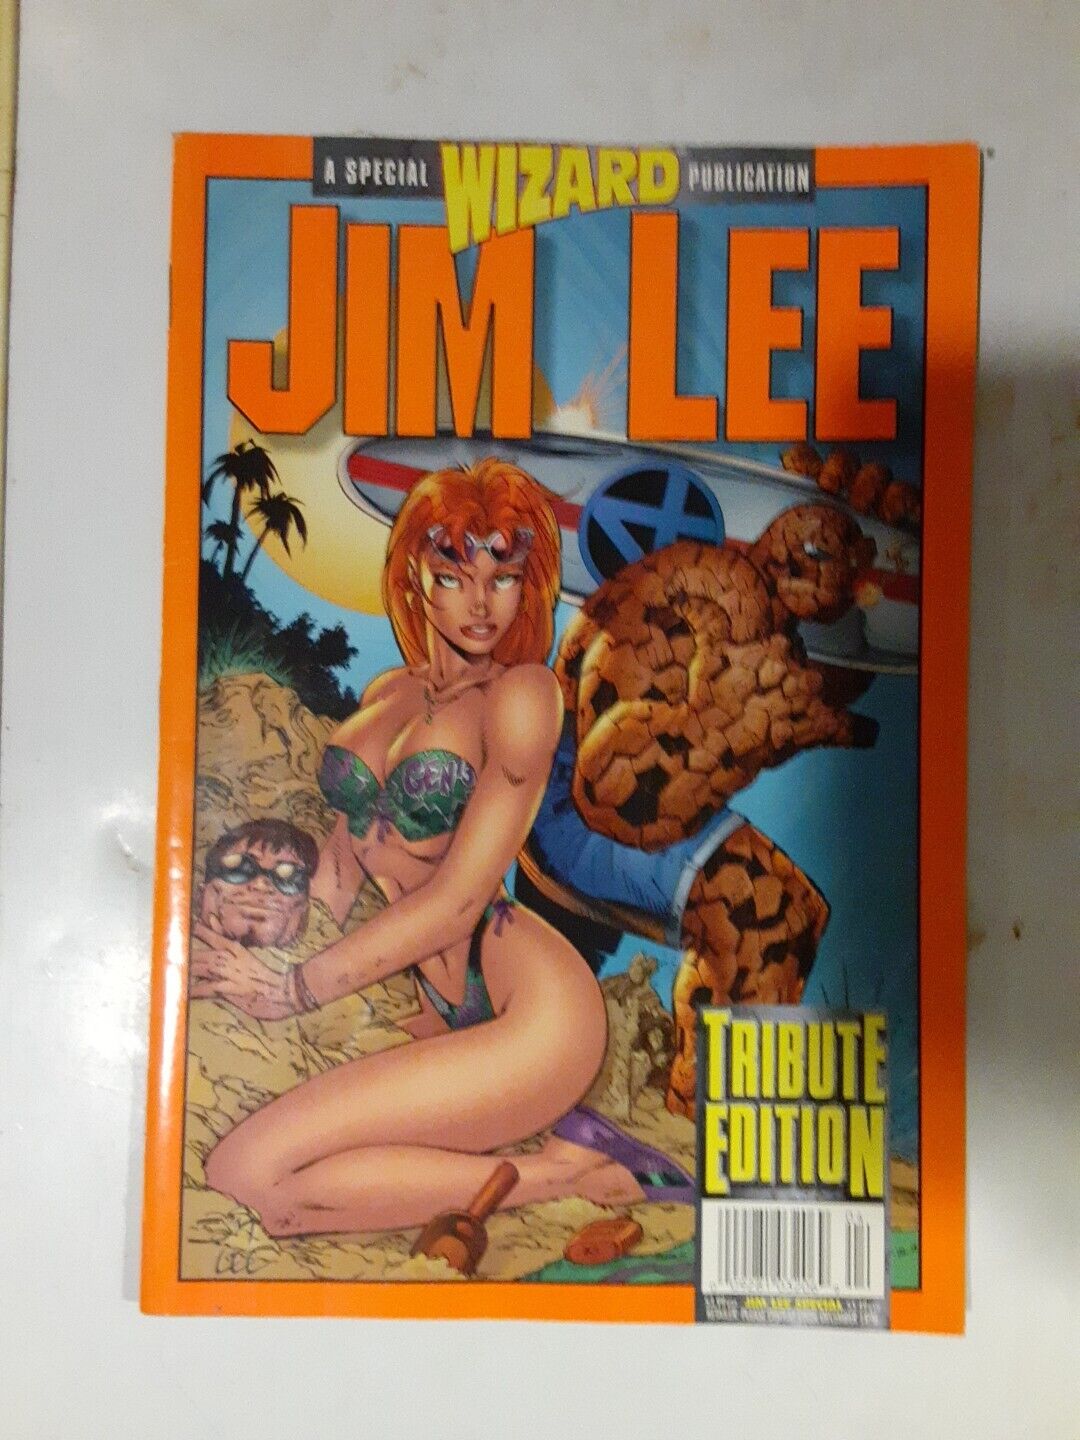 Jim Lee A Special Wizard Publication Tribute Edition Magazine 1996 Comics Image